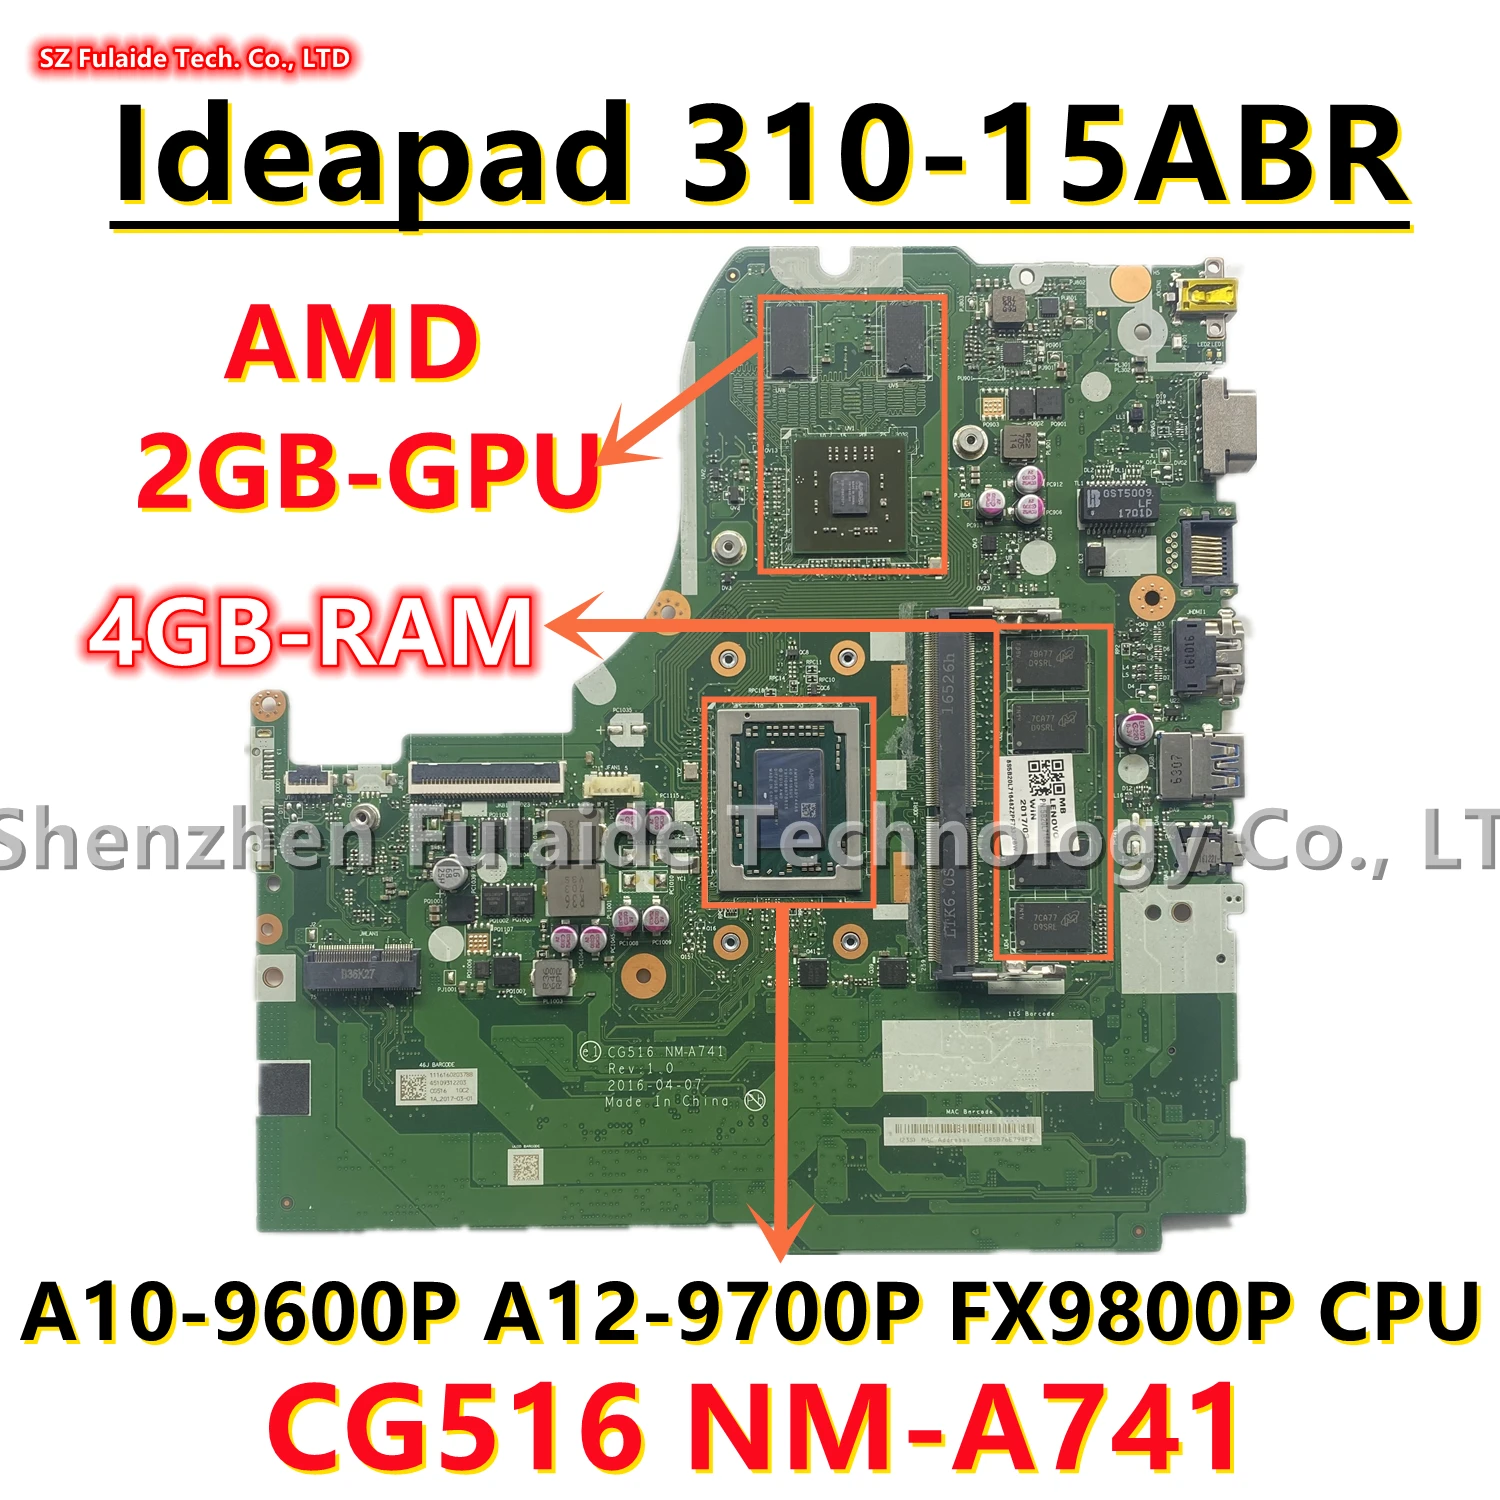 CG516 NM-A741 NMA741 Для материнской платы ноутбука Lenovo IdeaPad 310-15ABR С процессором A10-9600P A12-9700P FX9800P AMD 2 ГБ GPU 4 ГБ оперативной памяти